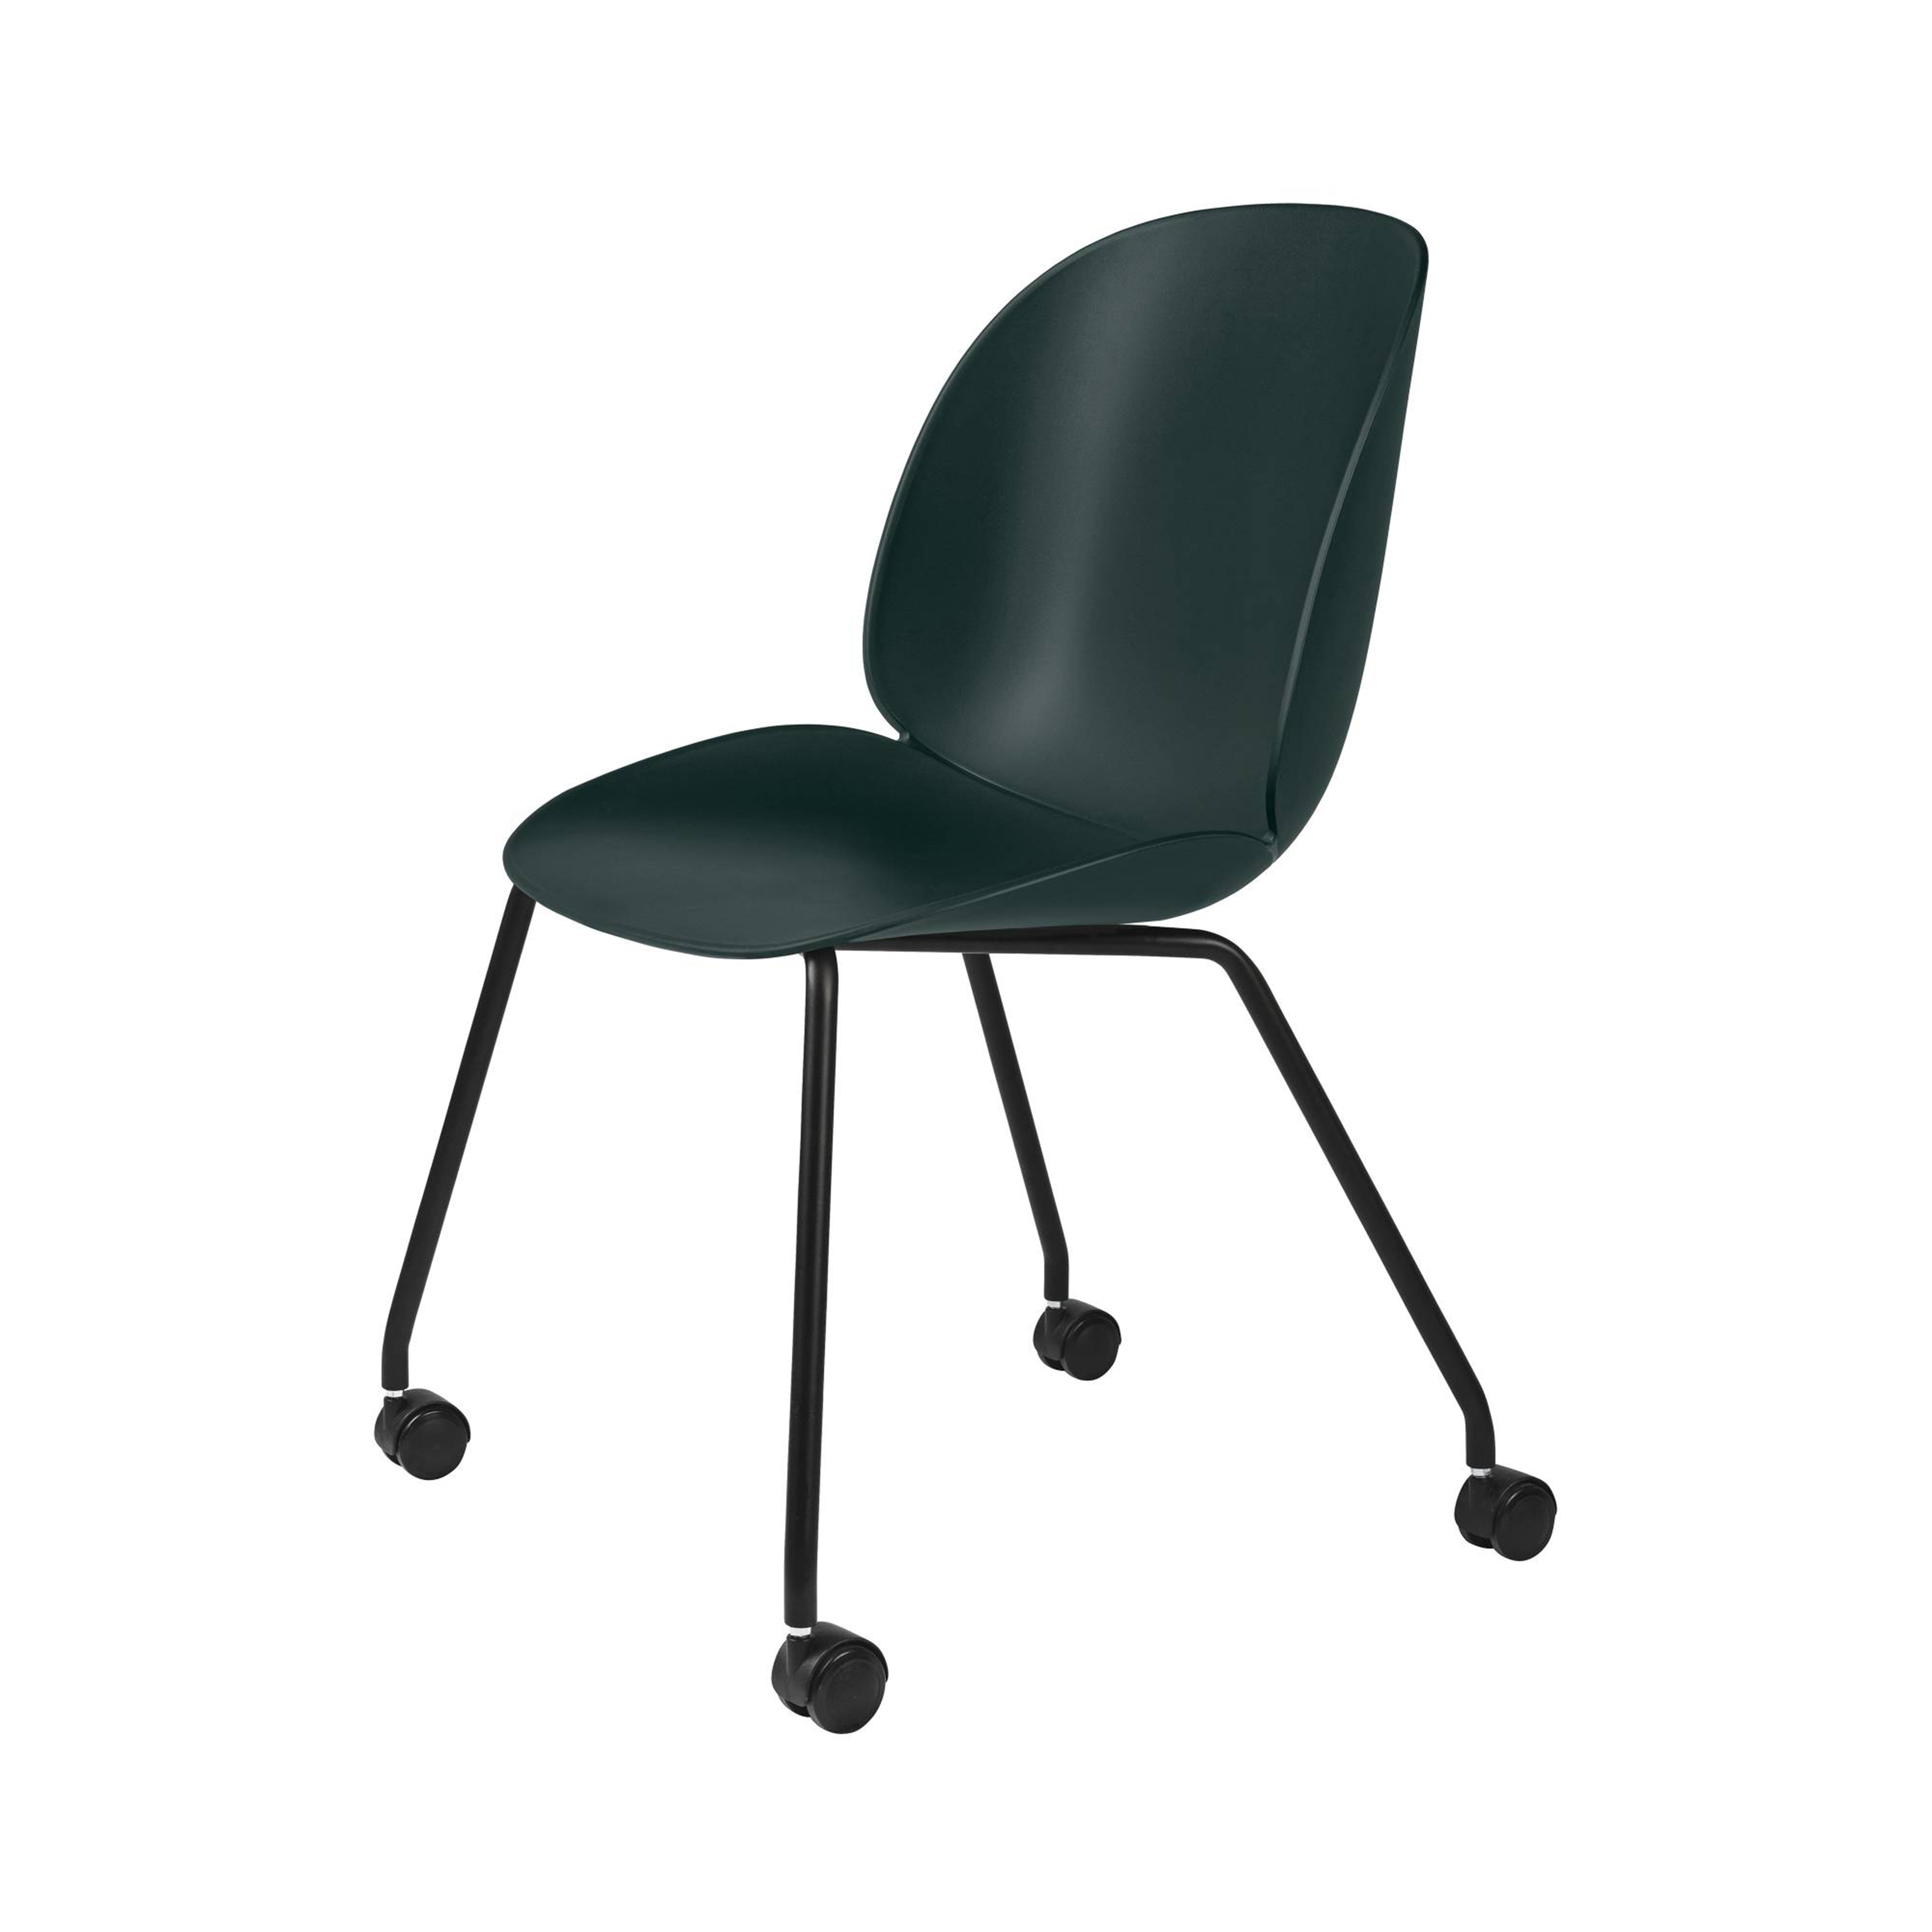 Beetle Meeting Chair: 4 Legs with Castors + Dark Green